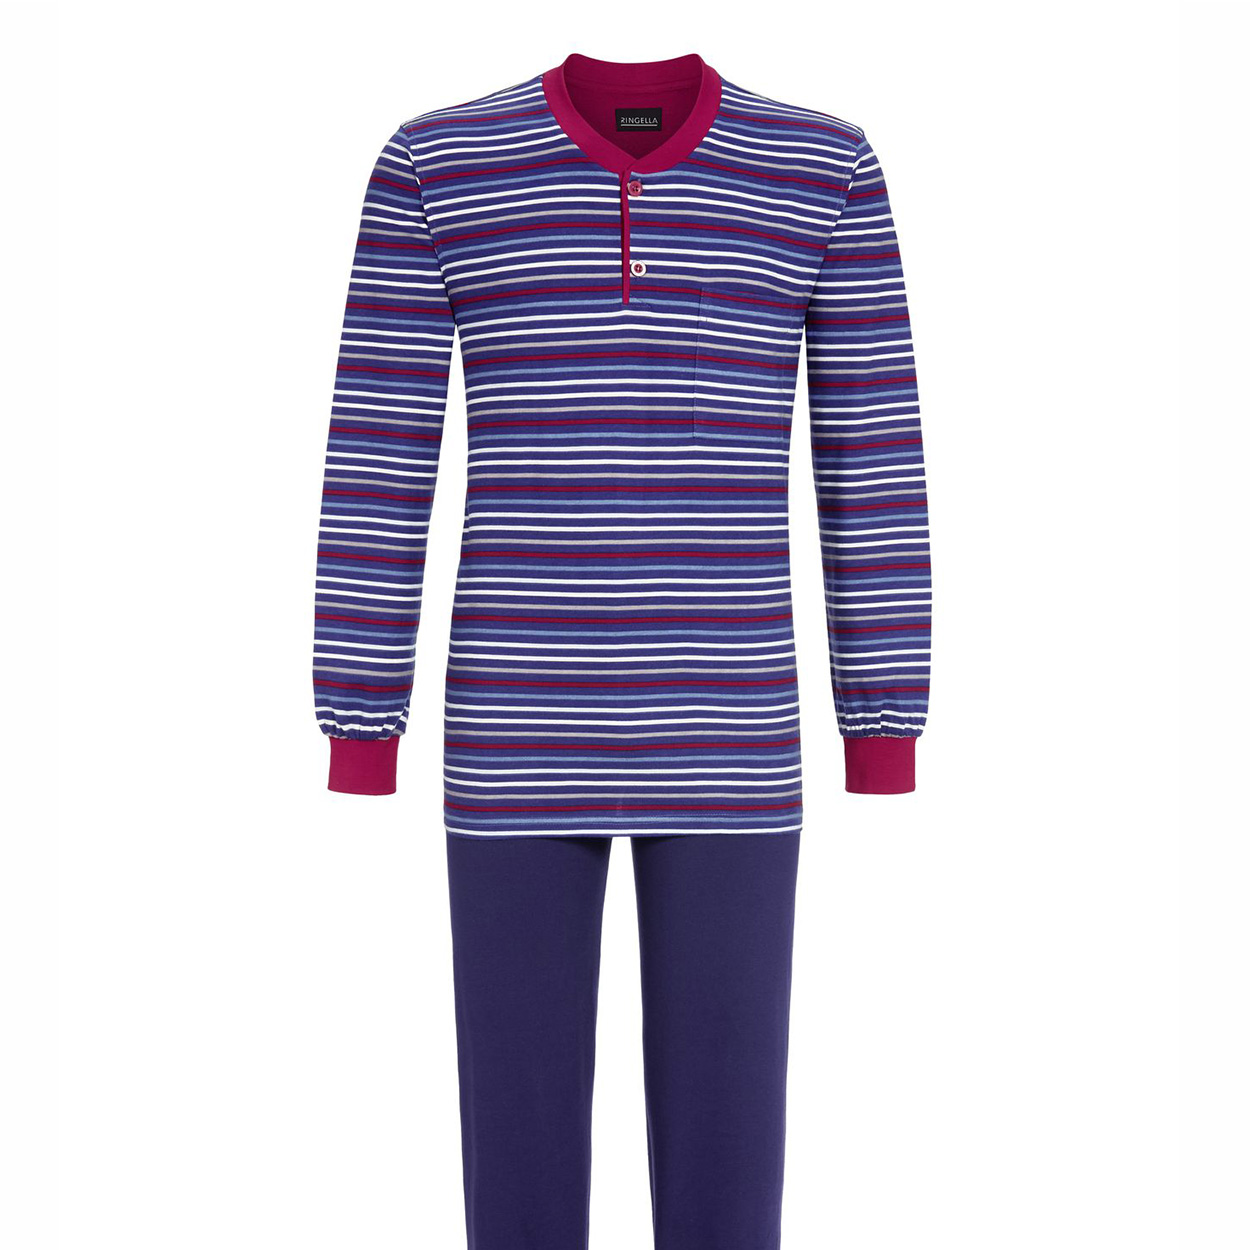 Pyjama long Ringella en coton : tee-shirt manches longues col tunisien rayé et pantalon bleu marine